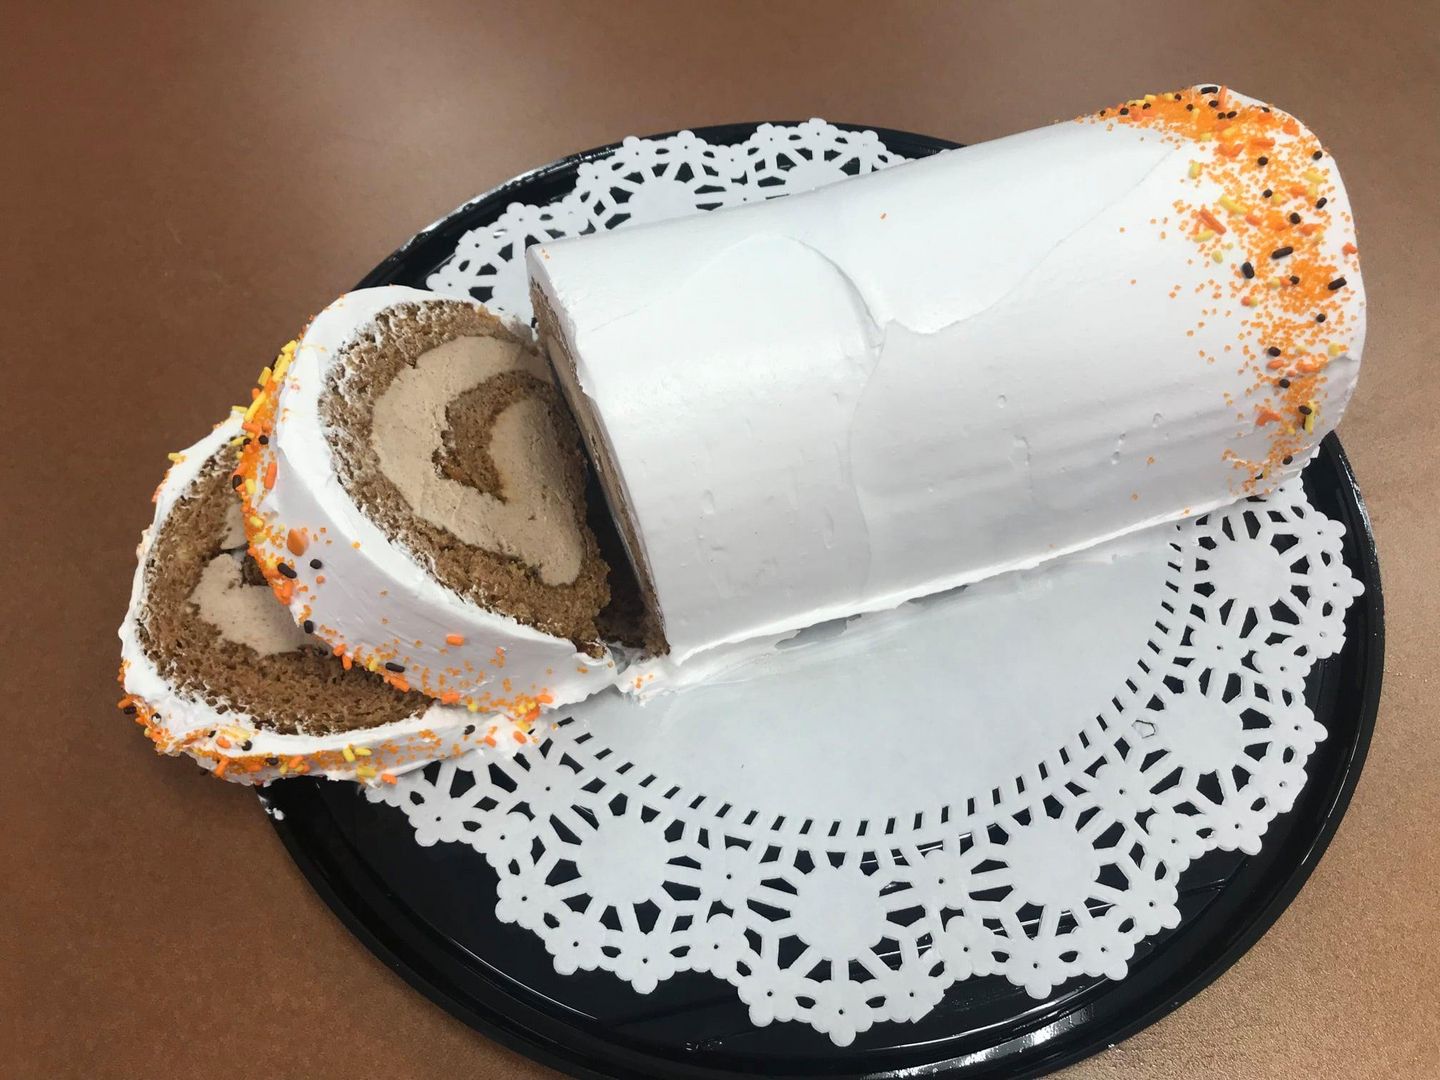 An ice cream cake roll